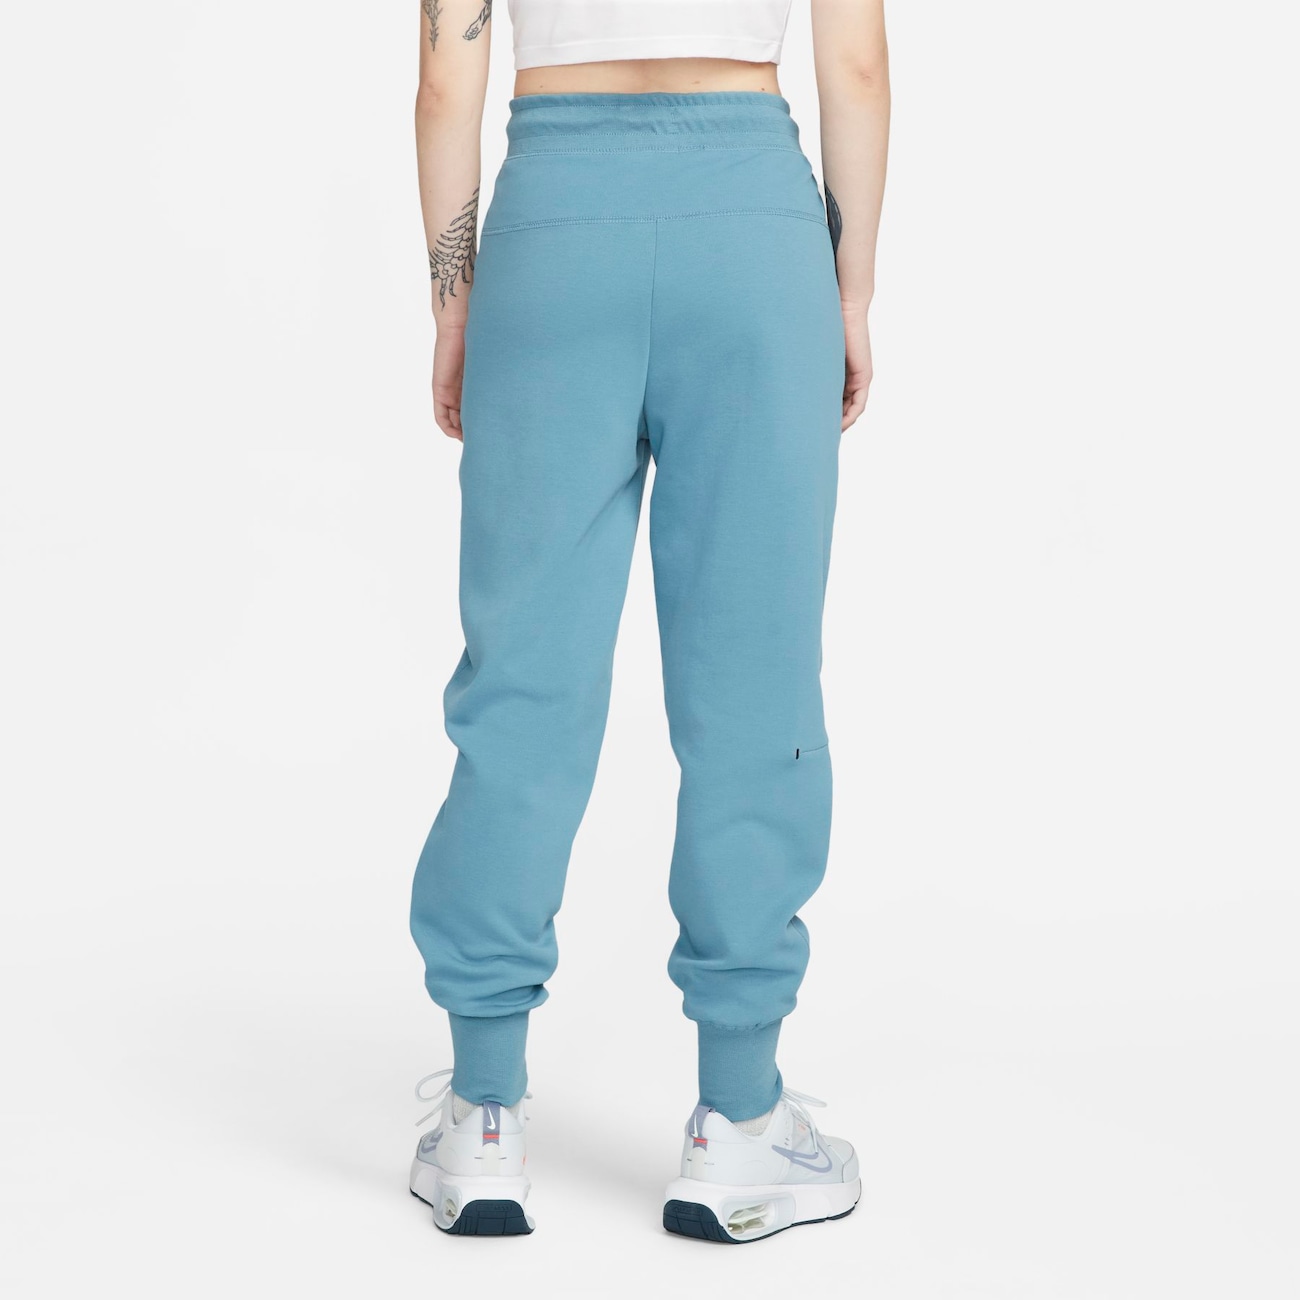 Calça Nike Sportswear Tech Fleece Feminina - Azul